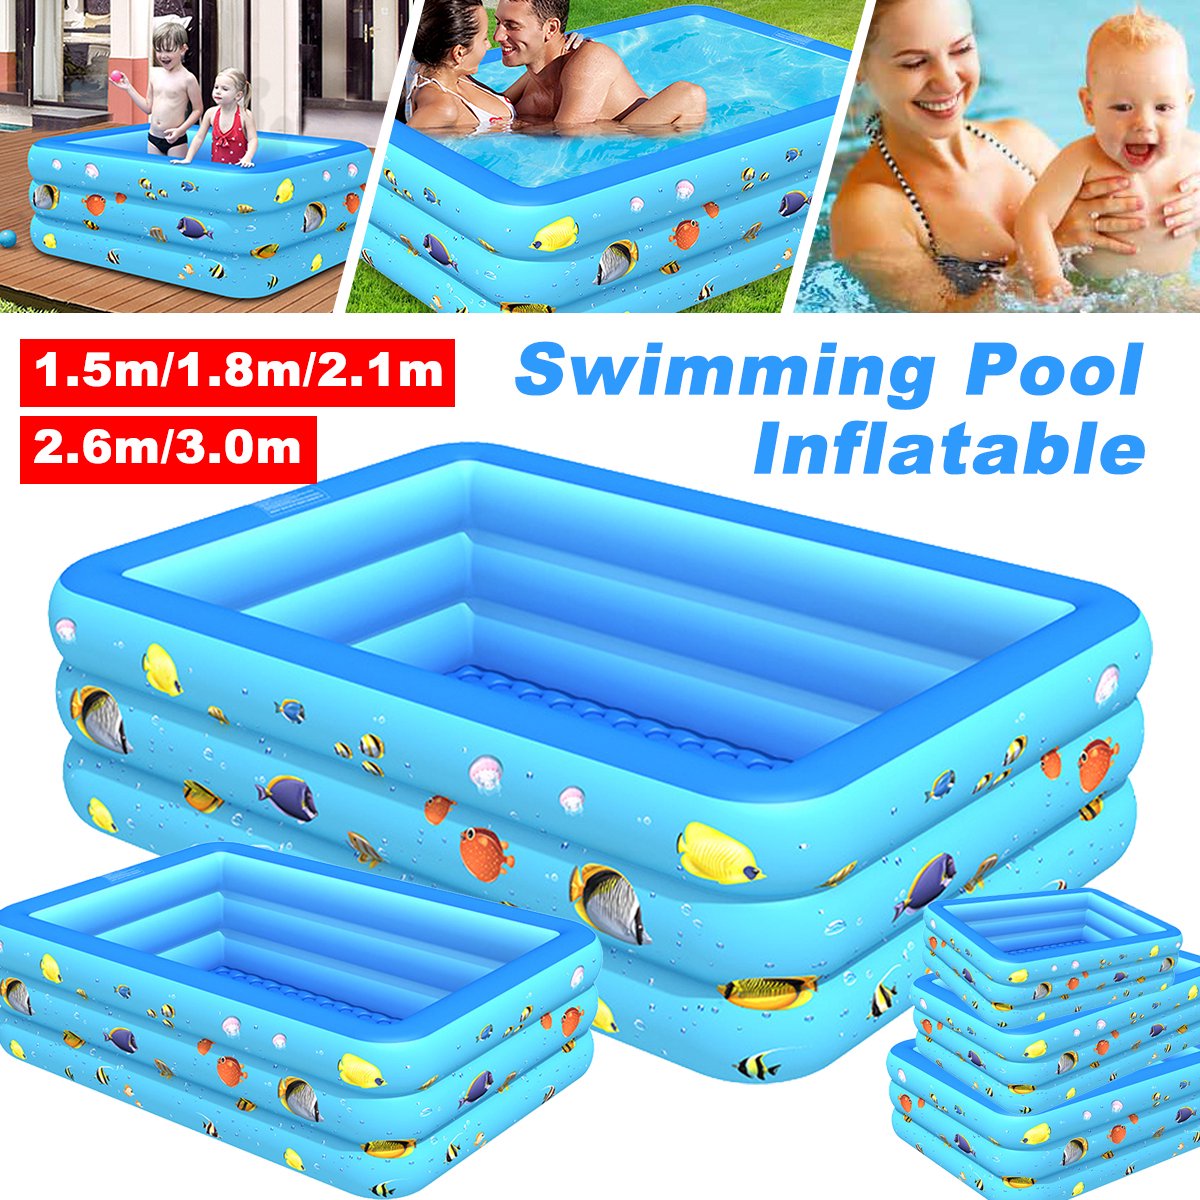 Coolike-Vierkant Opblaasbaar Zwembad-210x135x55 cm-Opblaasbare zwembaden-Familiebad- Kinderzwembad-Opblaaszwembad-blauw